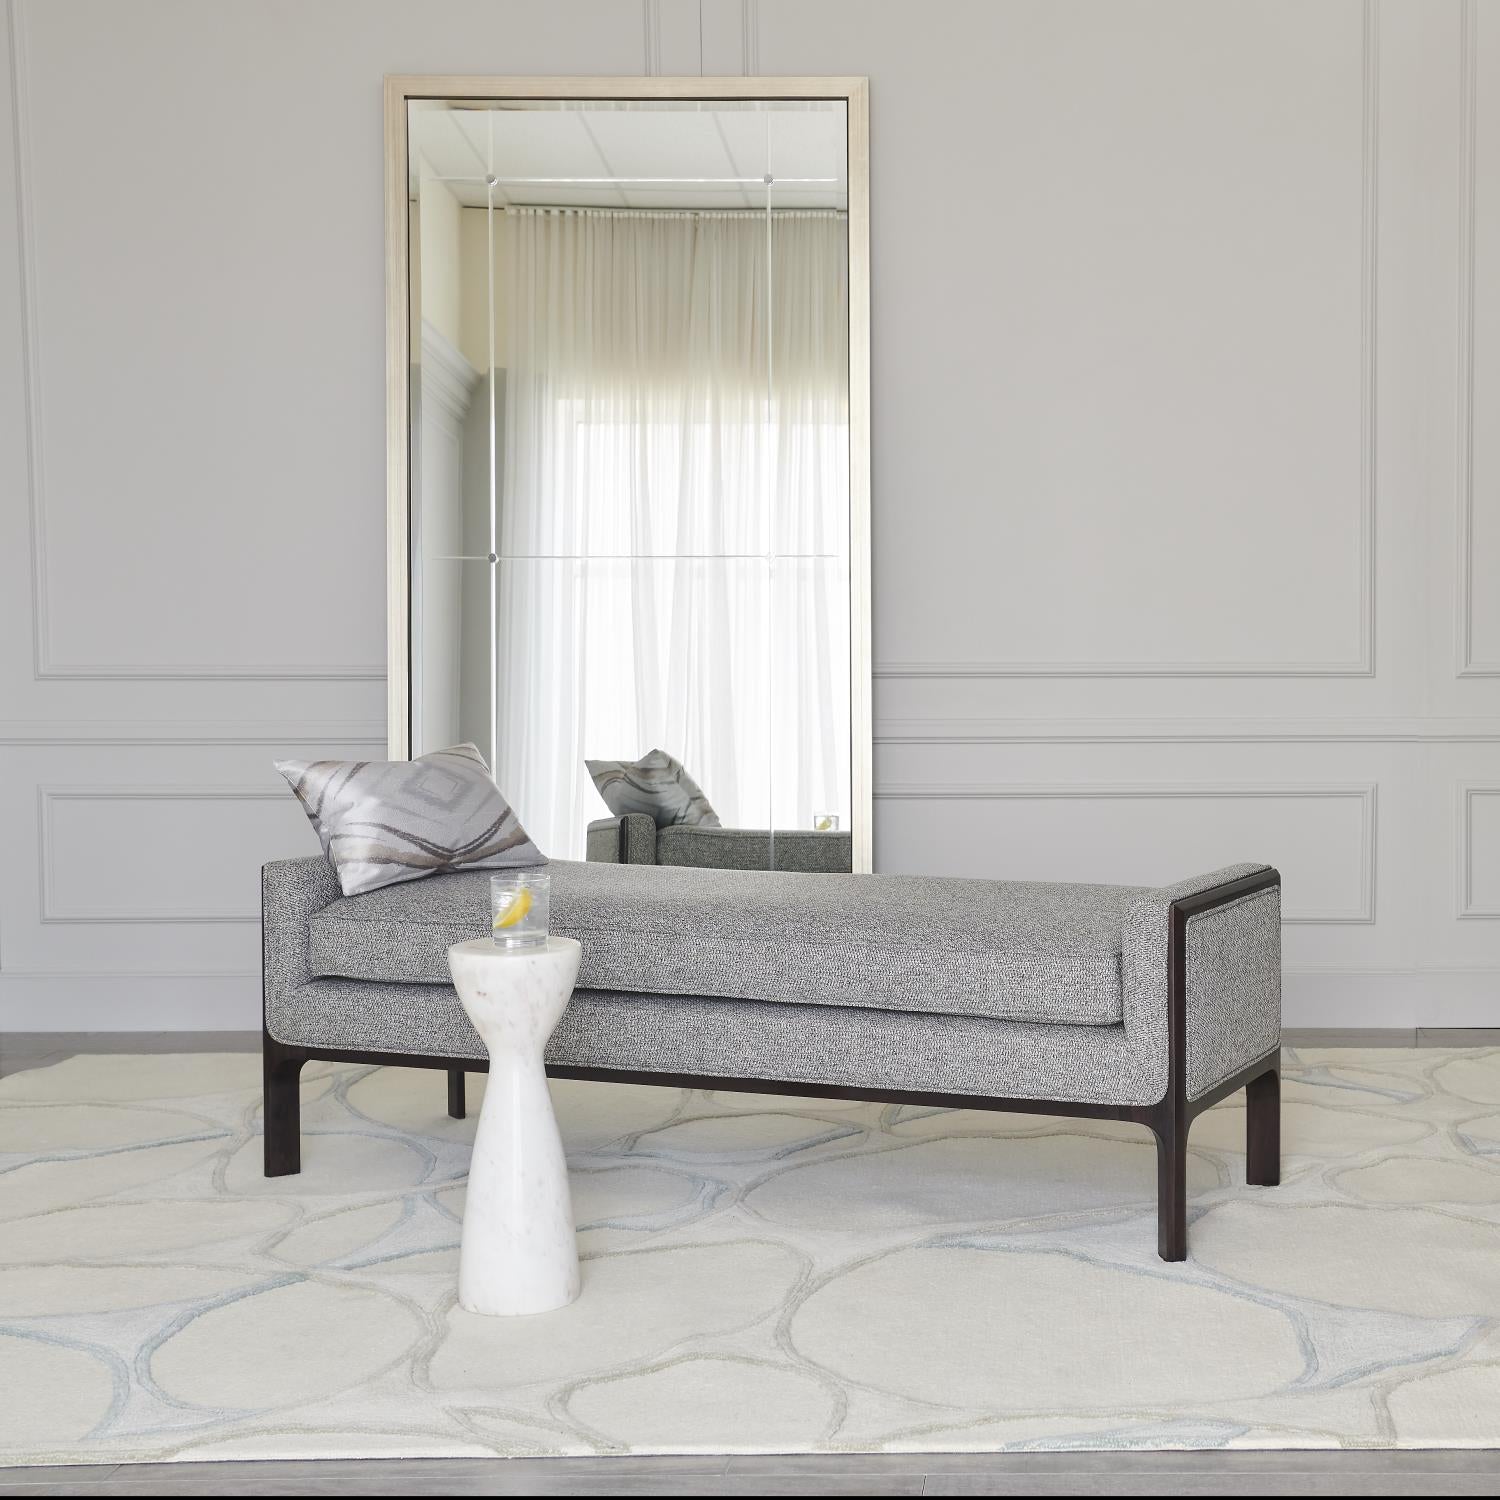 Beaumont Floor Mirror - Silver Leaf - Grats Decor Interior Design & Build Inc.